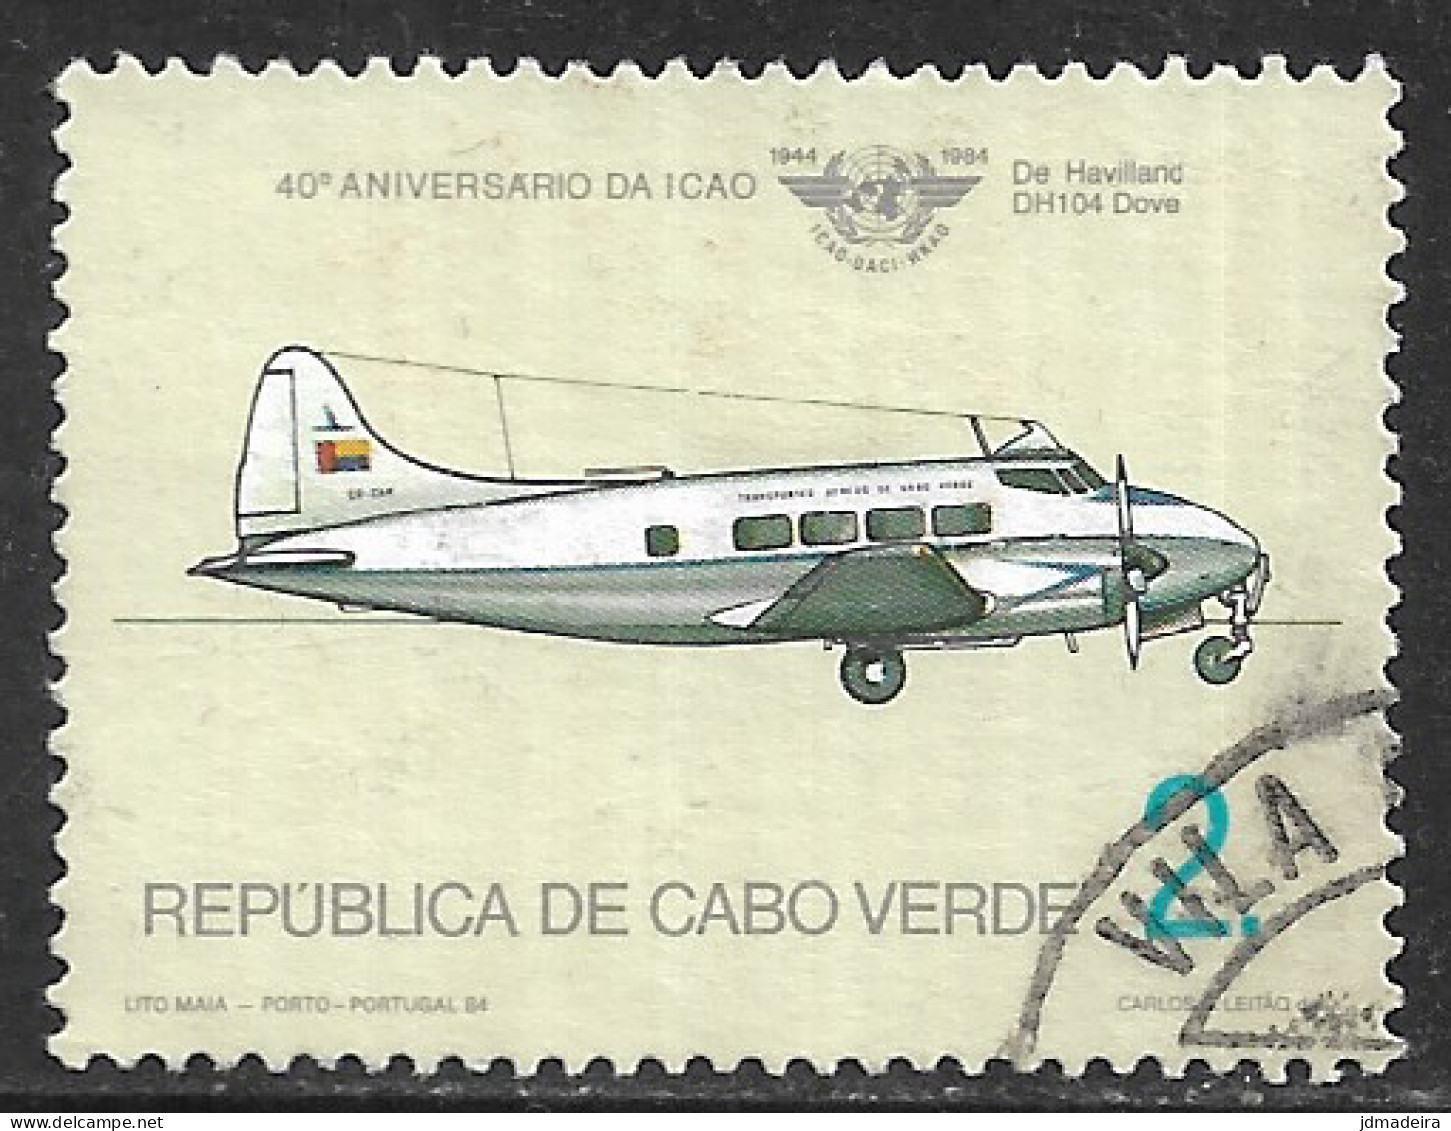 Cabo Verde – 1984 Civil Aviation Organization Anniversary 2. Used Stamp - Cape Verde